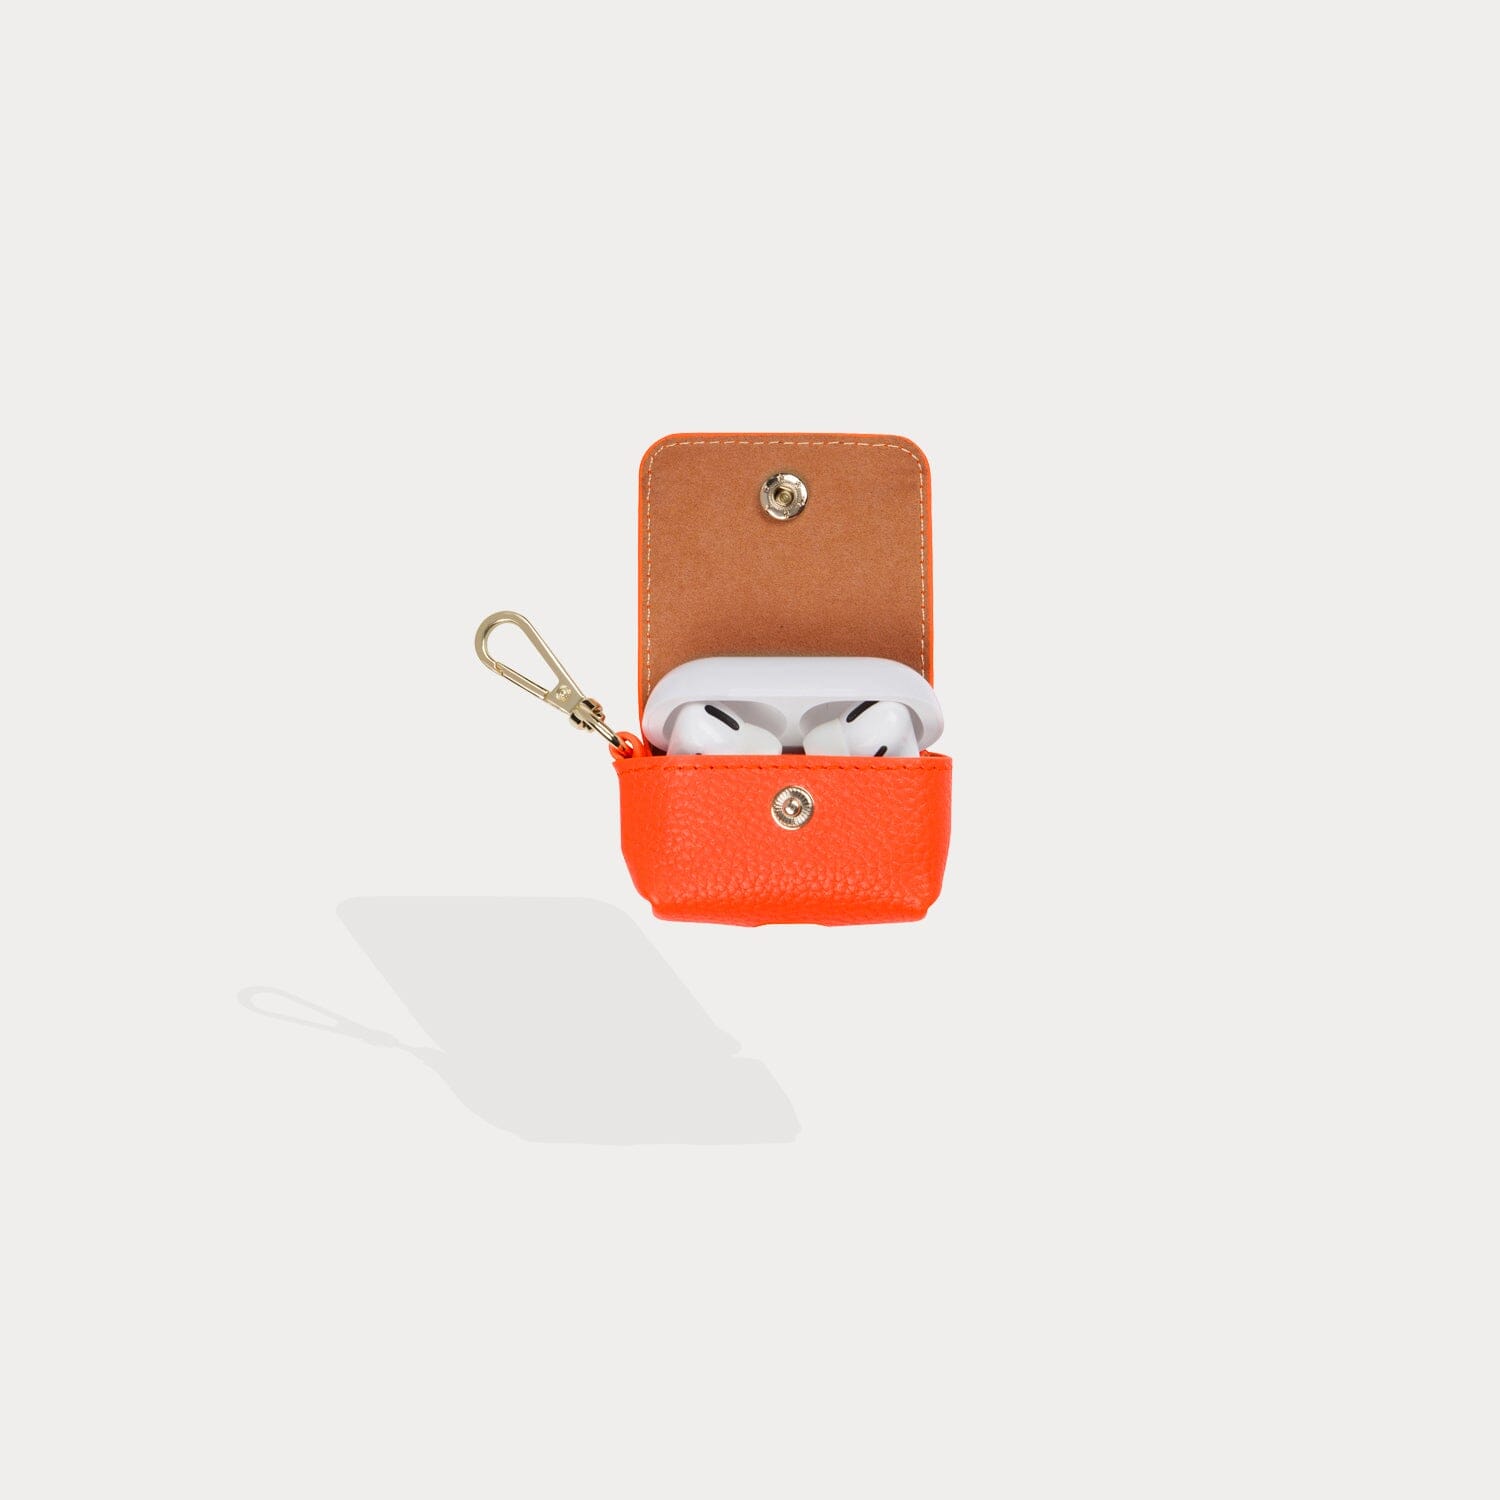 Avery AirPod Clip-On Pouch - Neon Orange/Gold Pouch Core Bandolier 